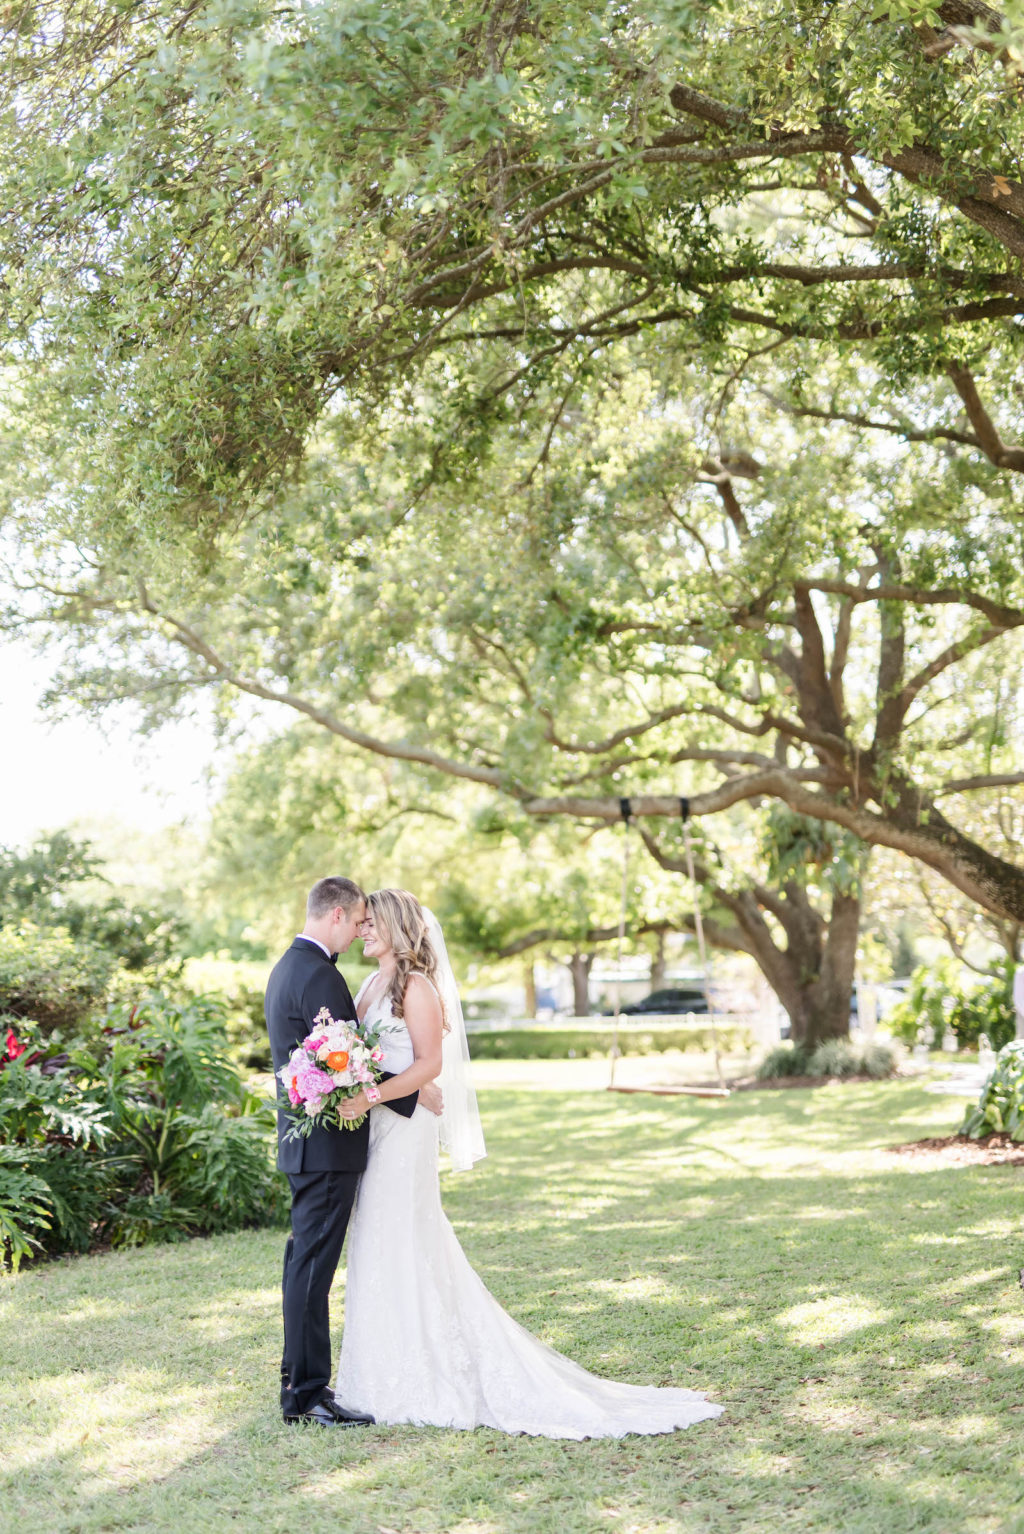 Tampa Bay Wedding Couple Portrait | Tampa Wedding Venue Davis Islands Garden Club | Special Moments Event Planning